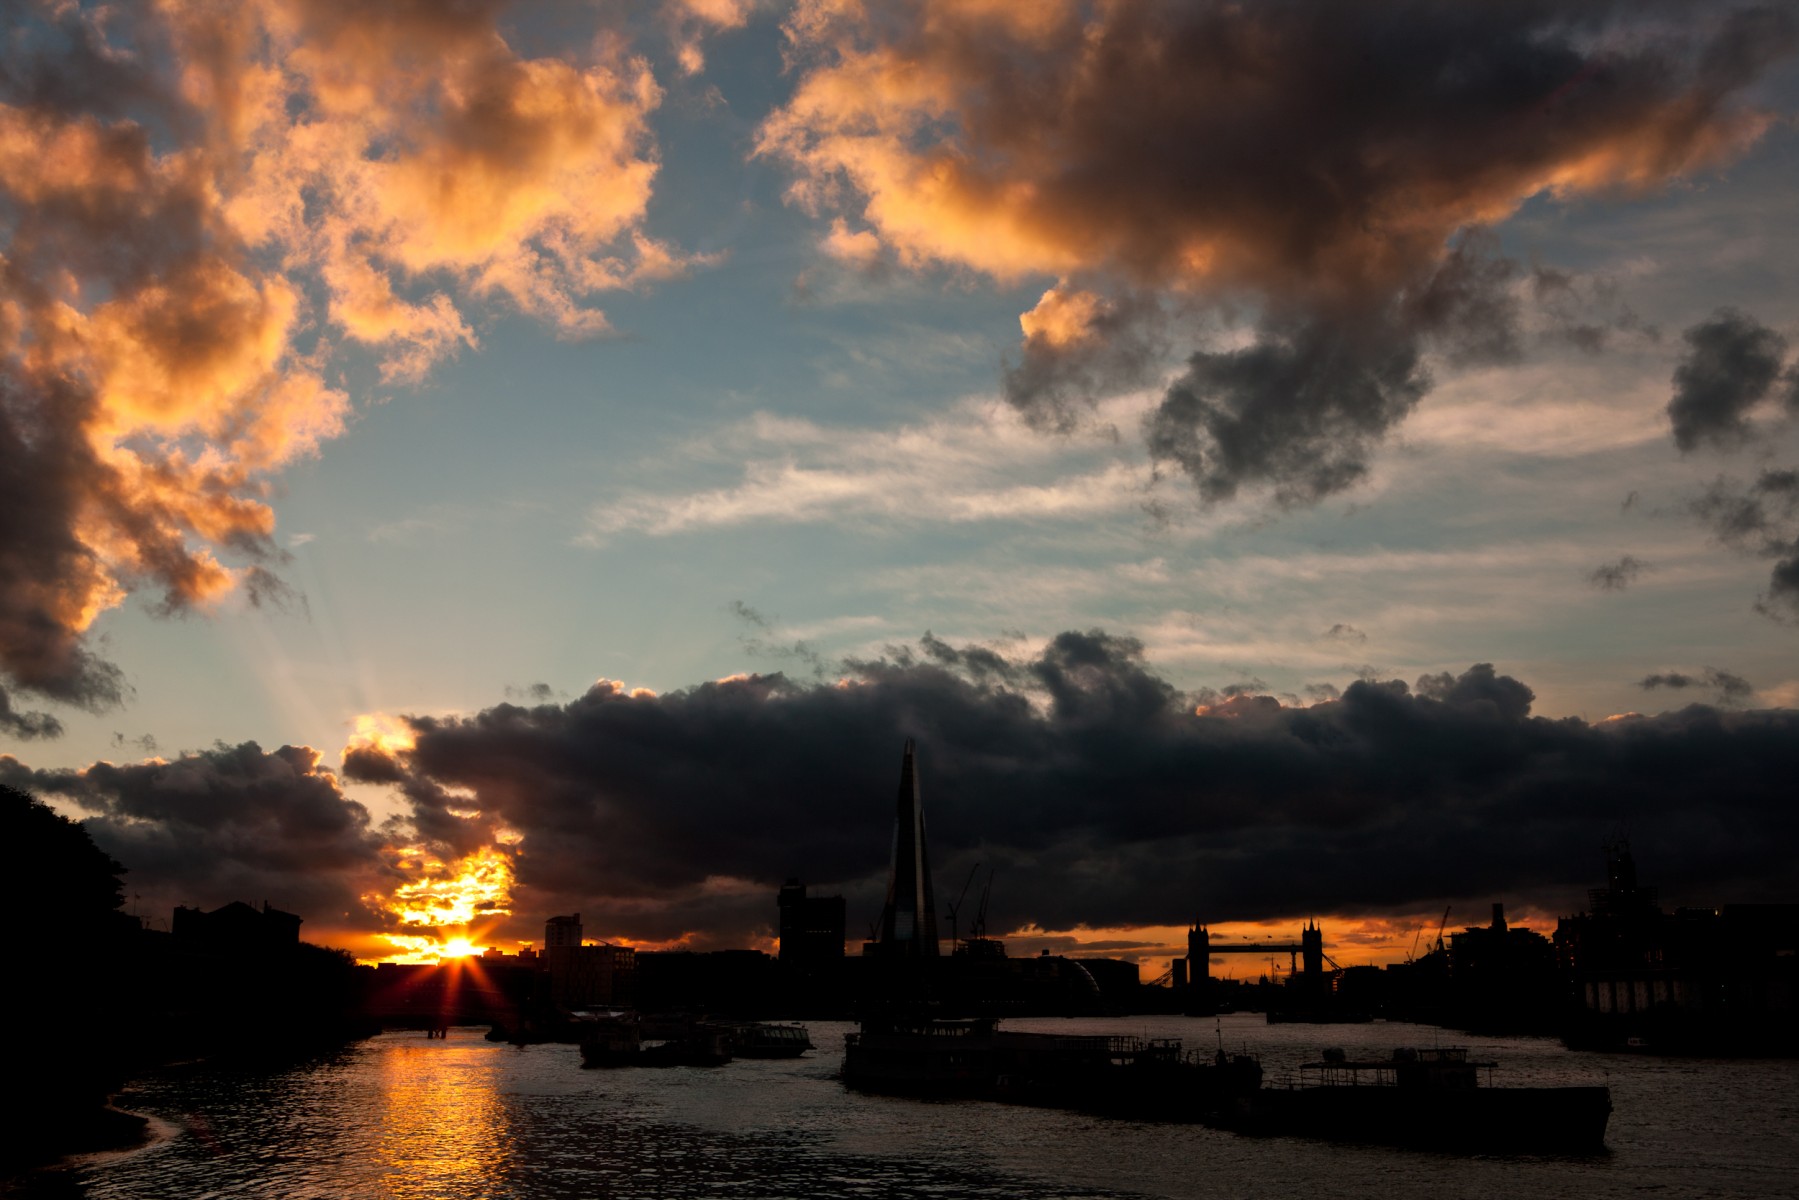 Setting sun on Thames skyline